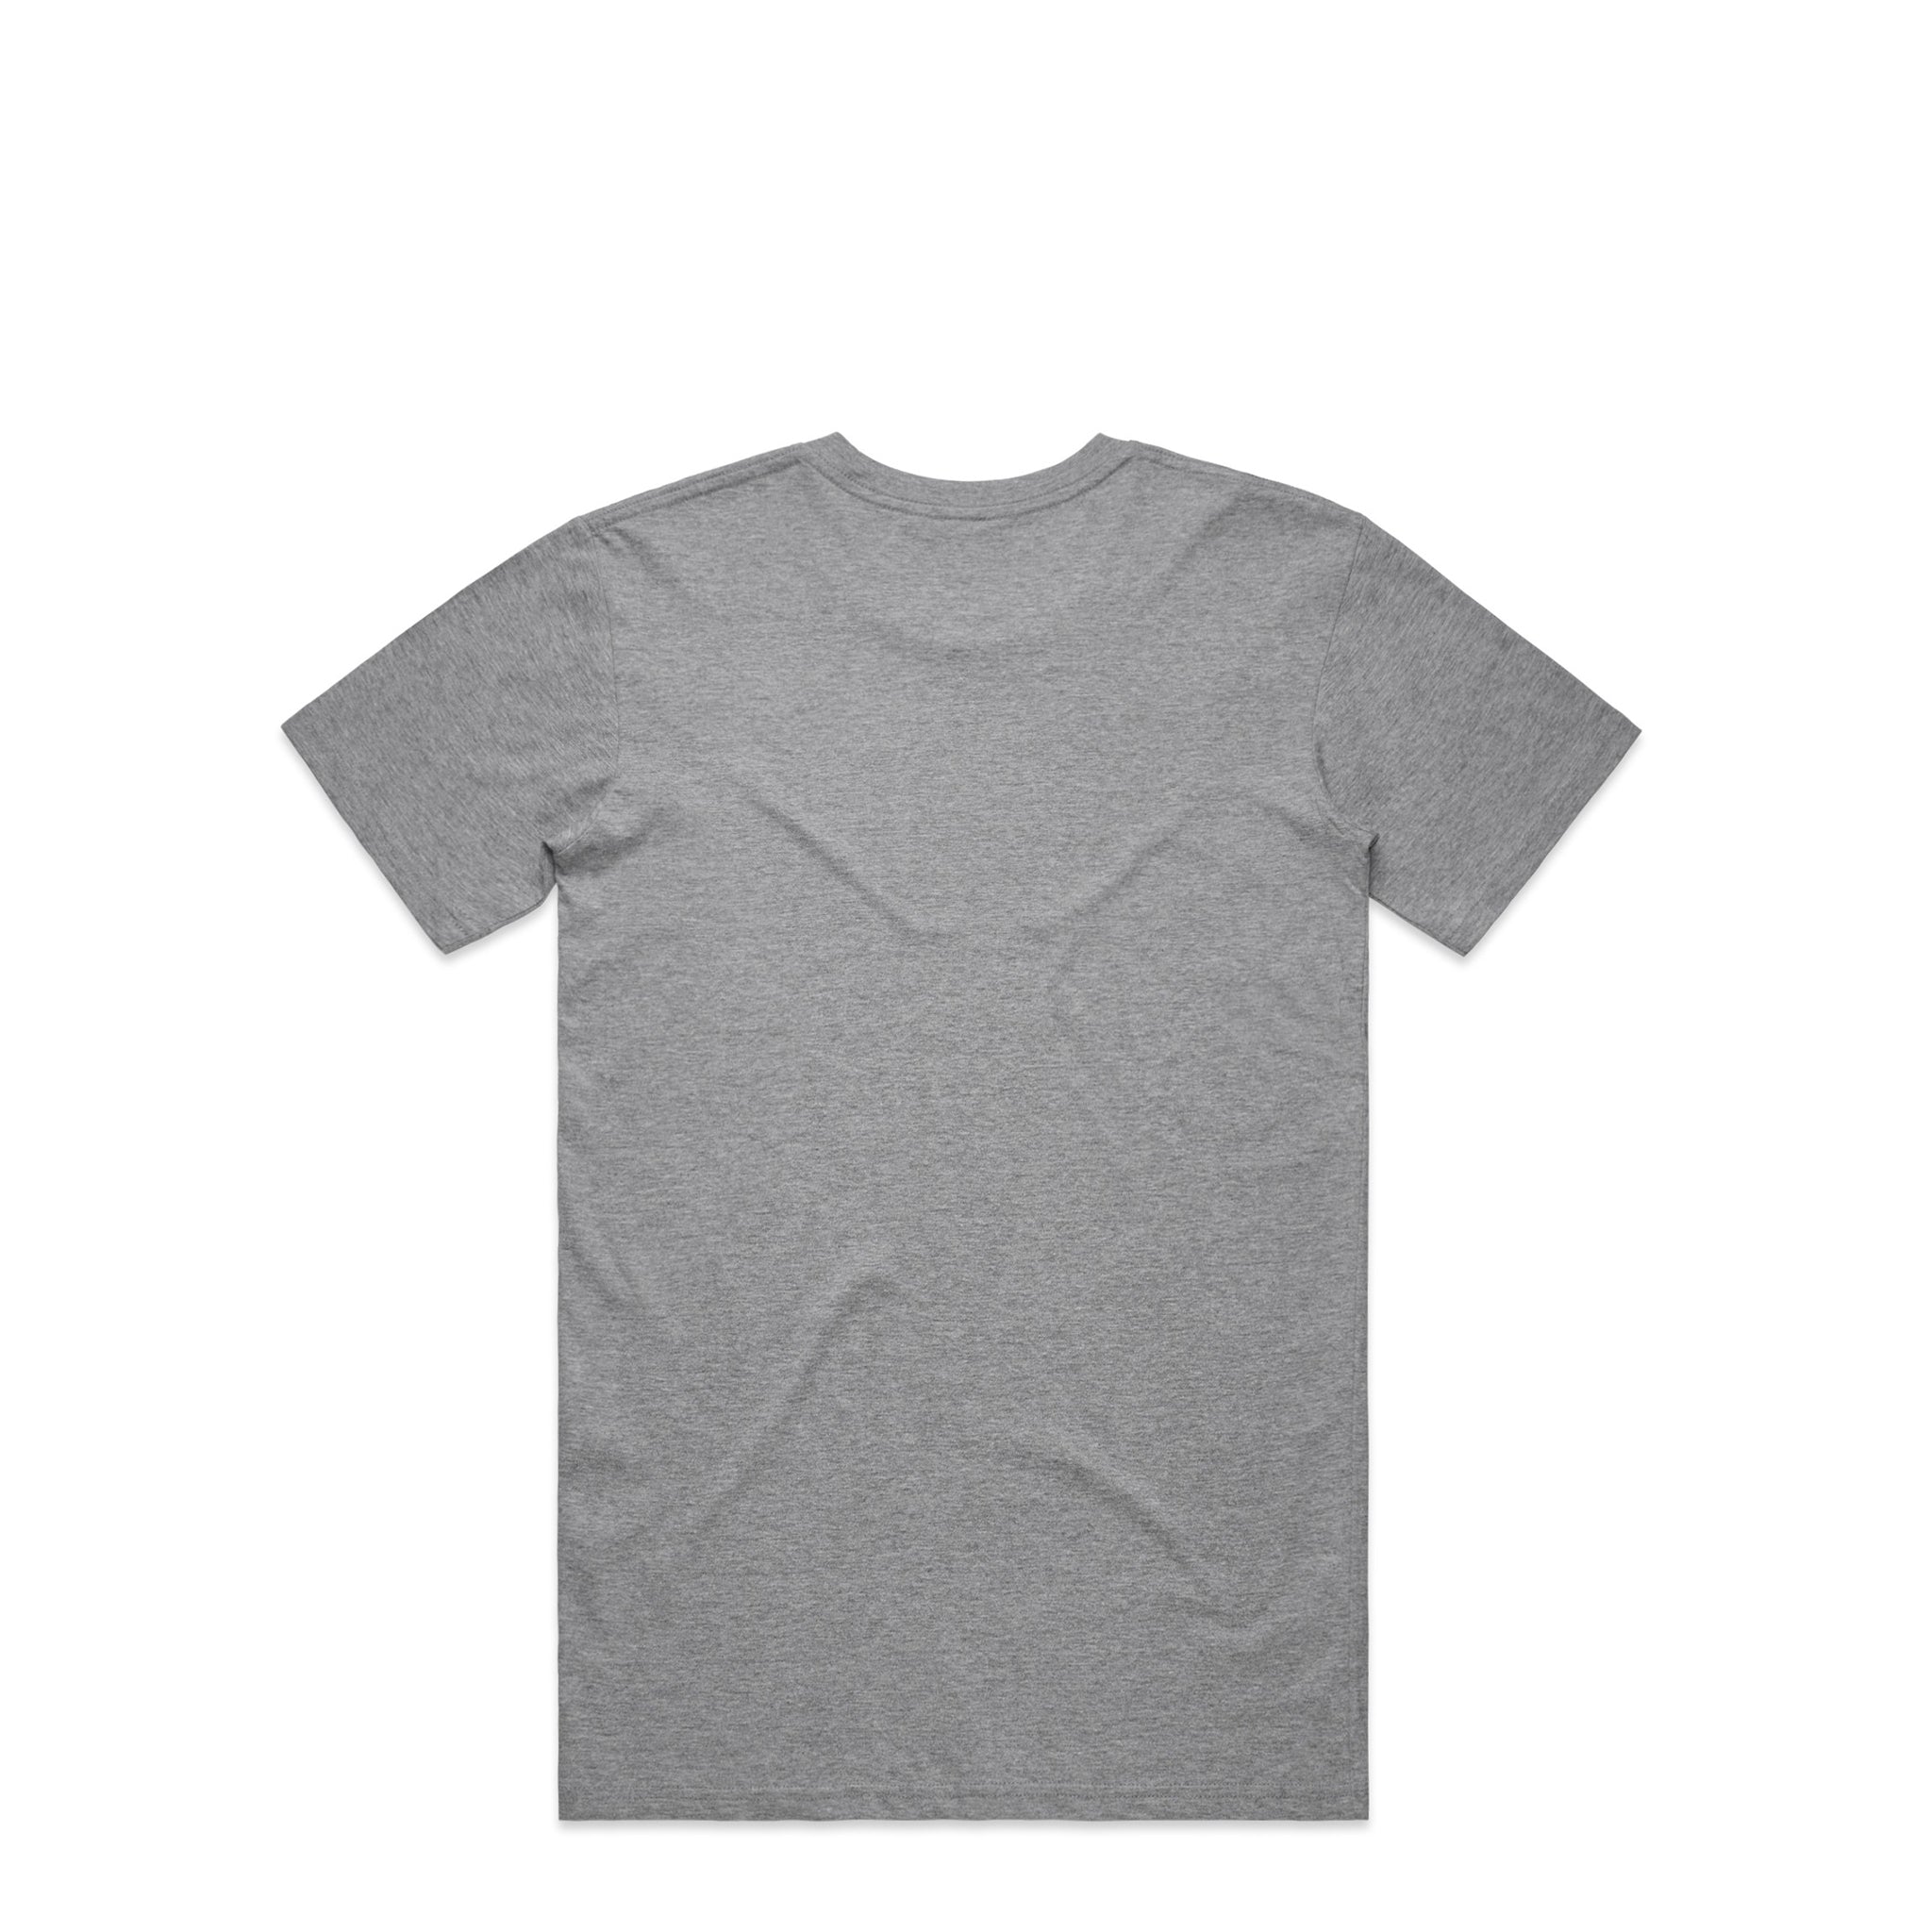 Rockstar Black Roundel T-Shirt – Grey Marl